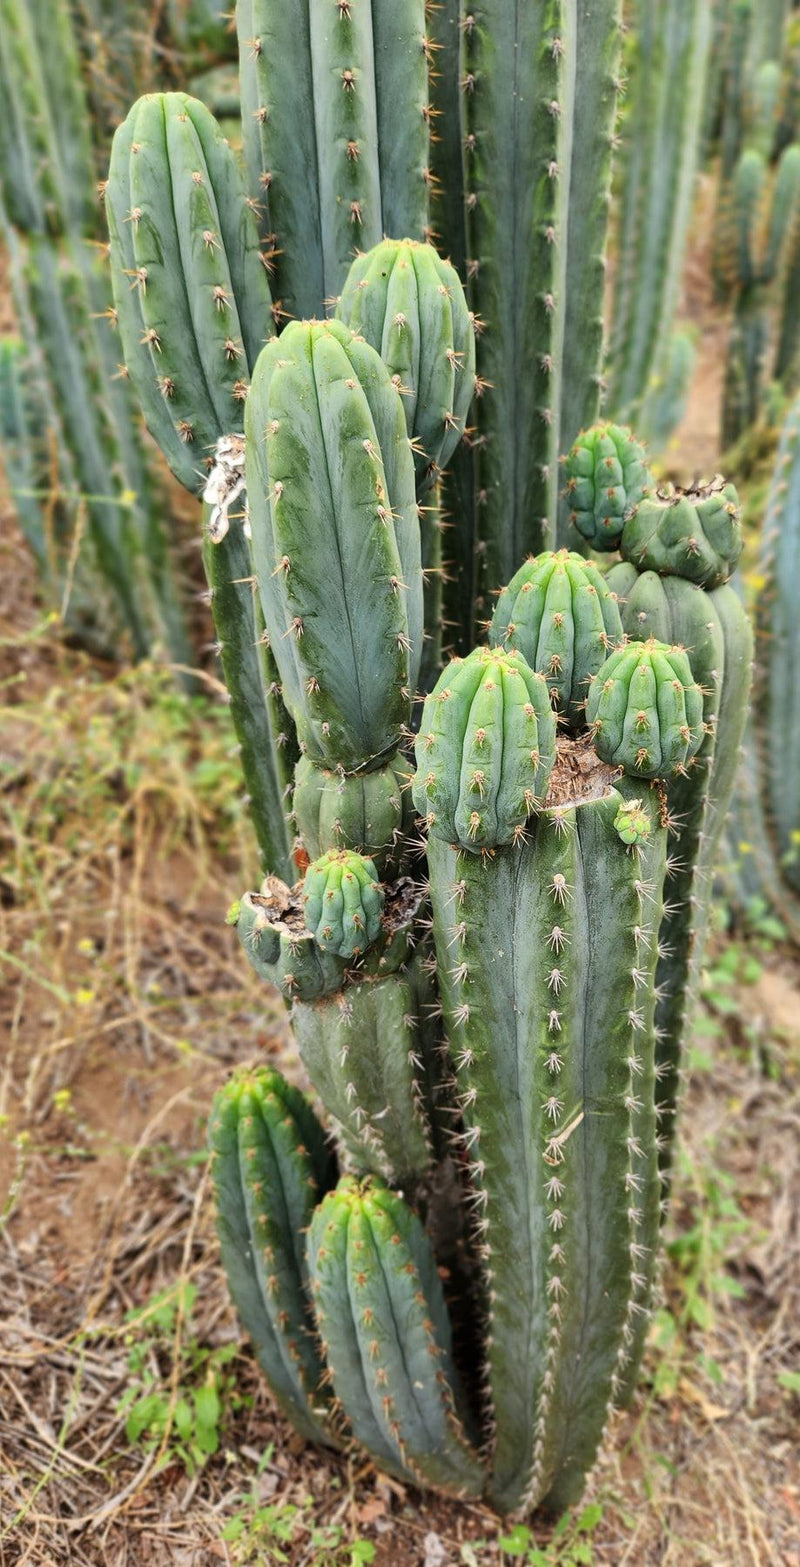 #EC196 EXACT trichocereus Peruvianus "Rancho" Ornamental Cactus Cuttings and Potted